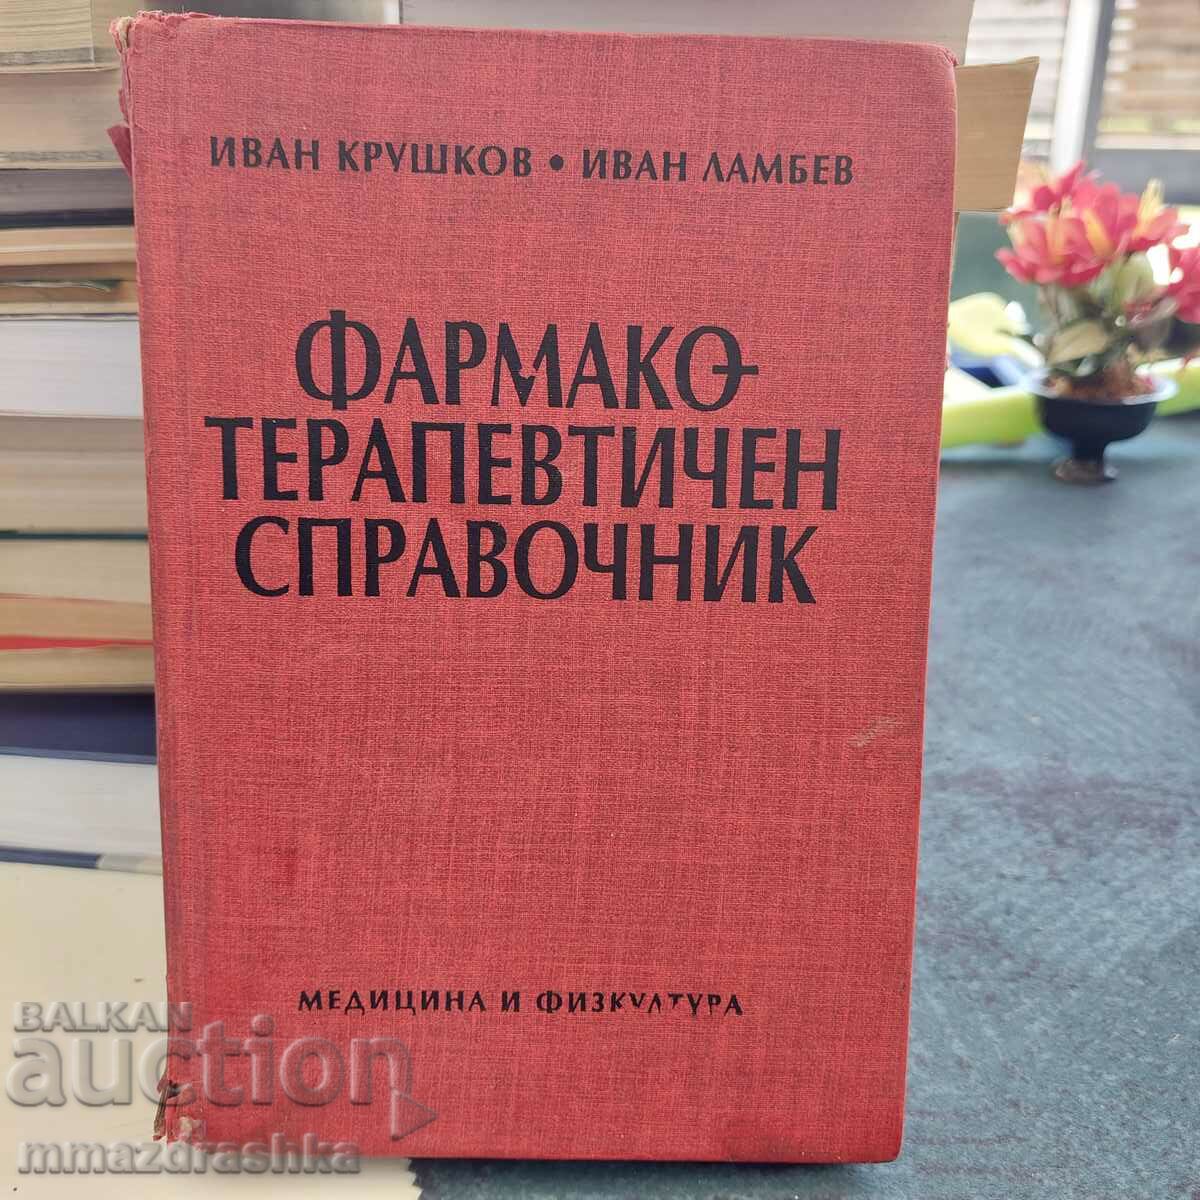 Dicţionar farmaco-terapeutic, I. Krushkov